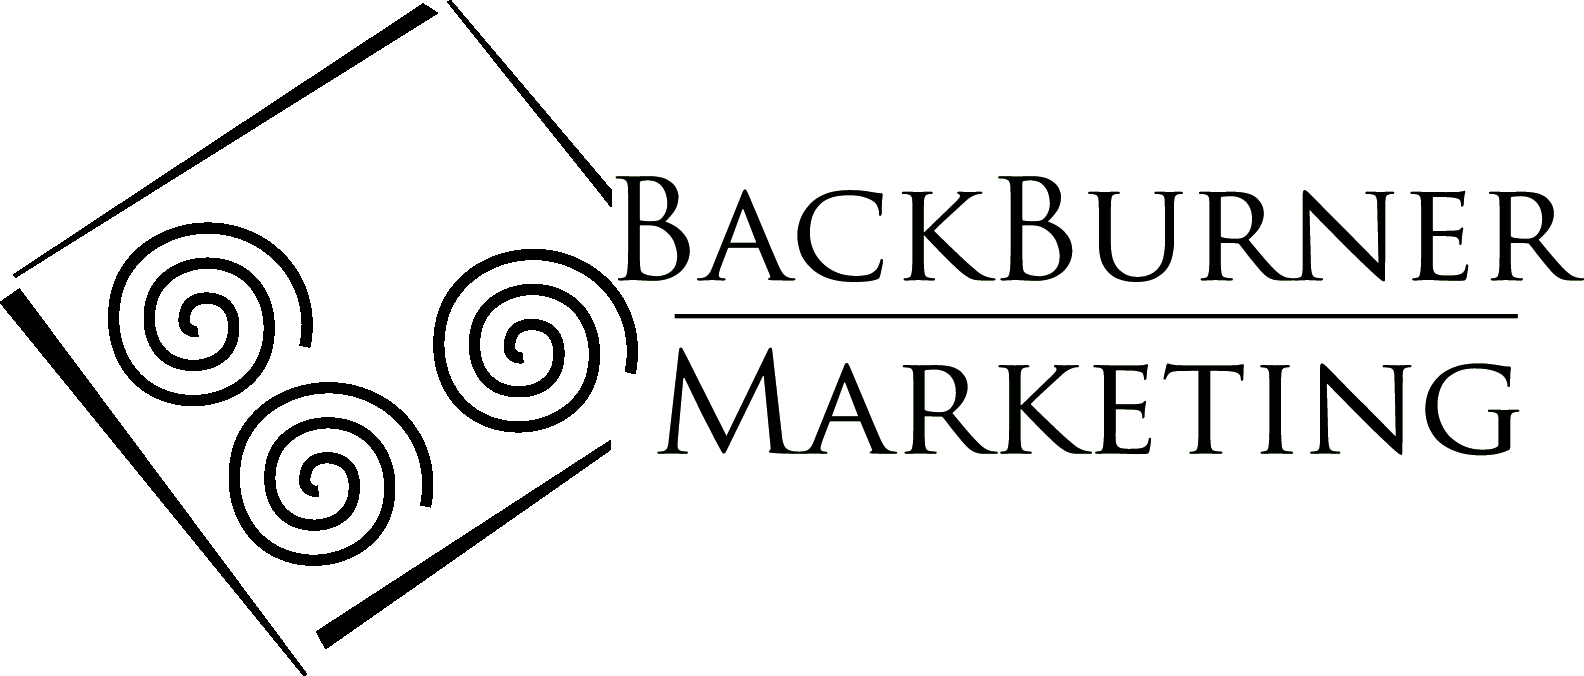 BackBurner Marketing logo b&w